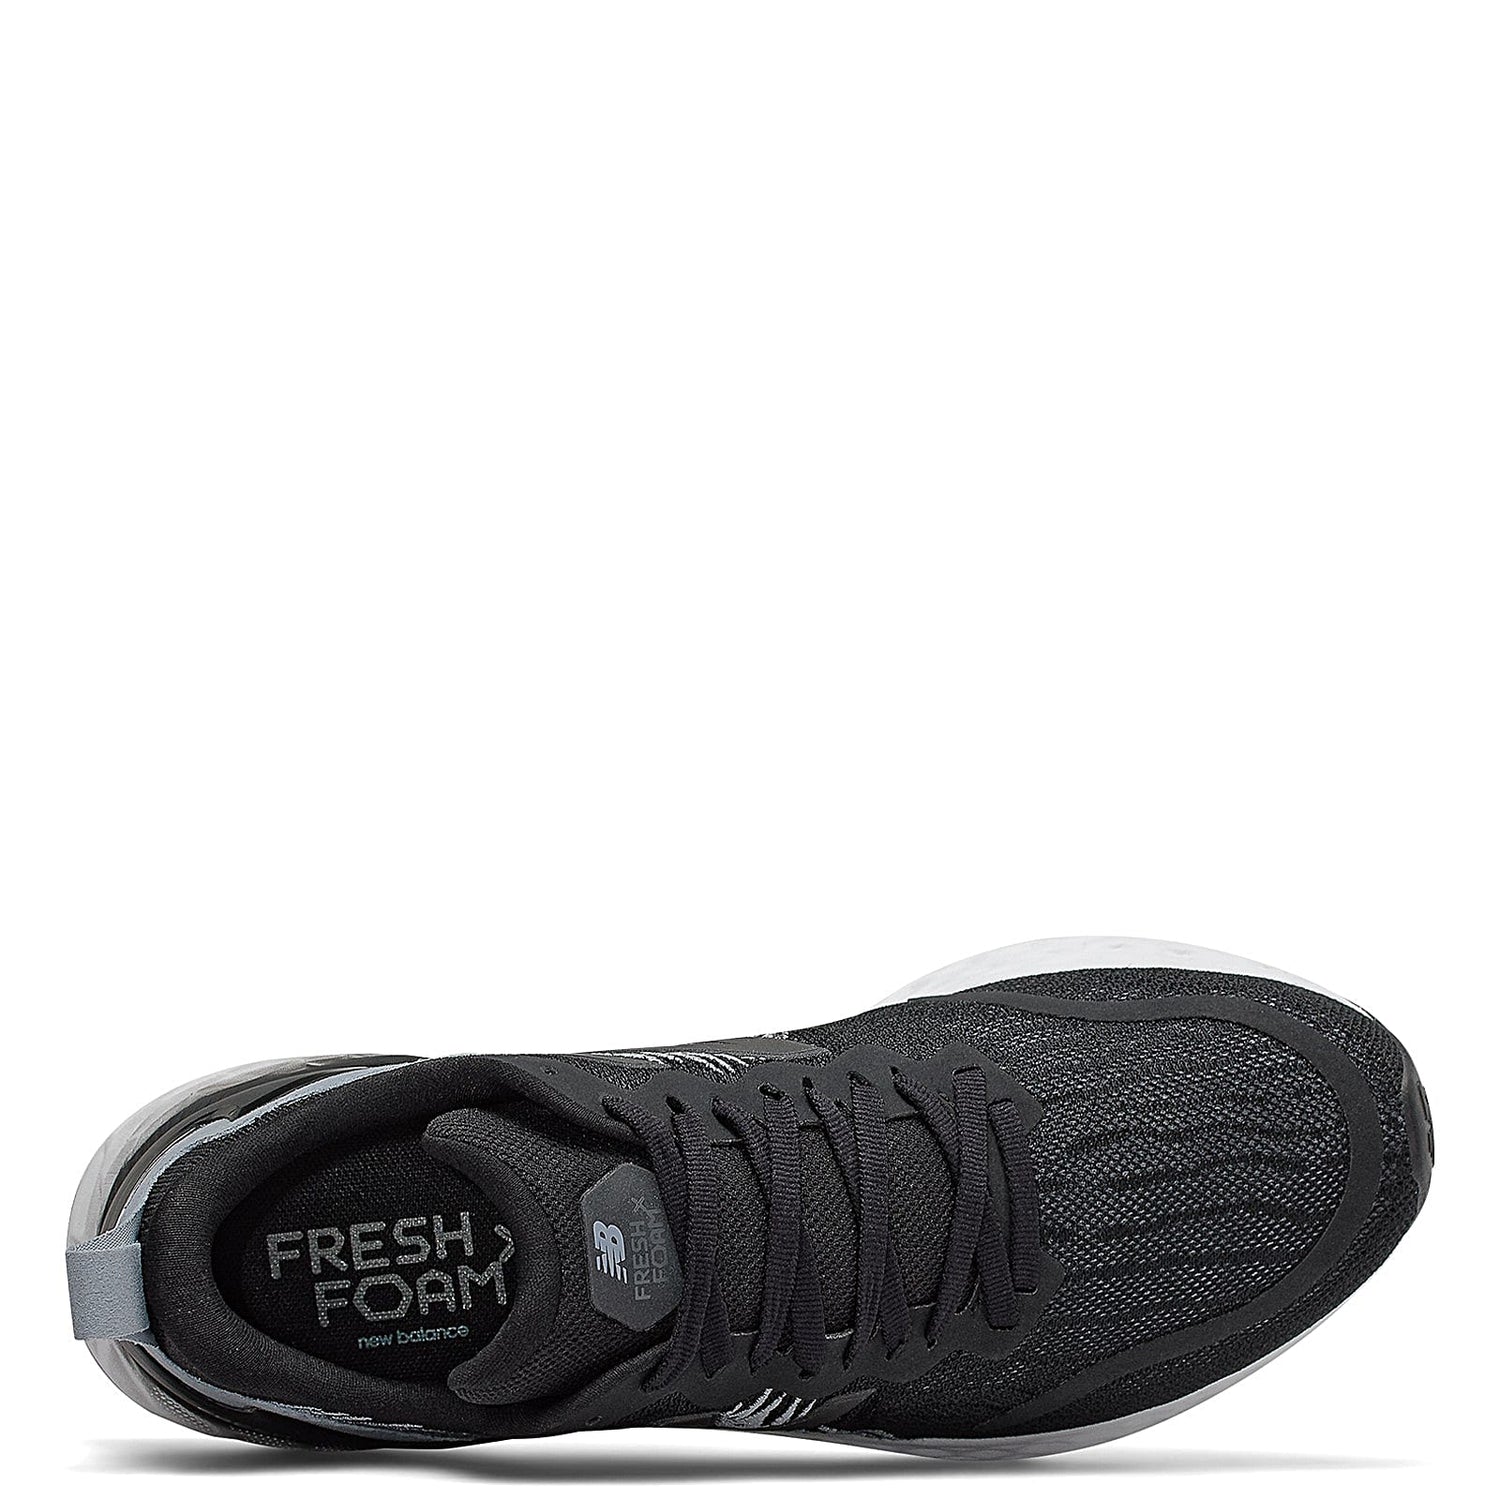 Peltz Shoes  Men's New Balance Fresh Foam Tempo Running Shoe